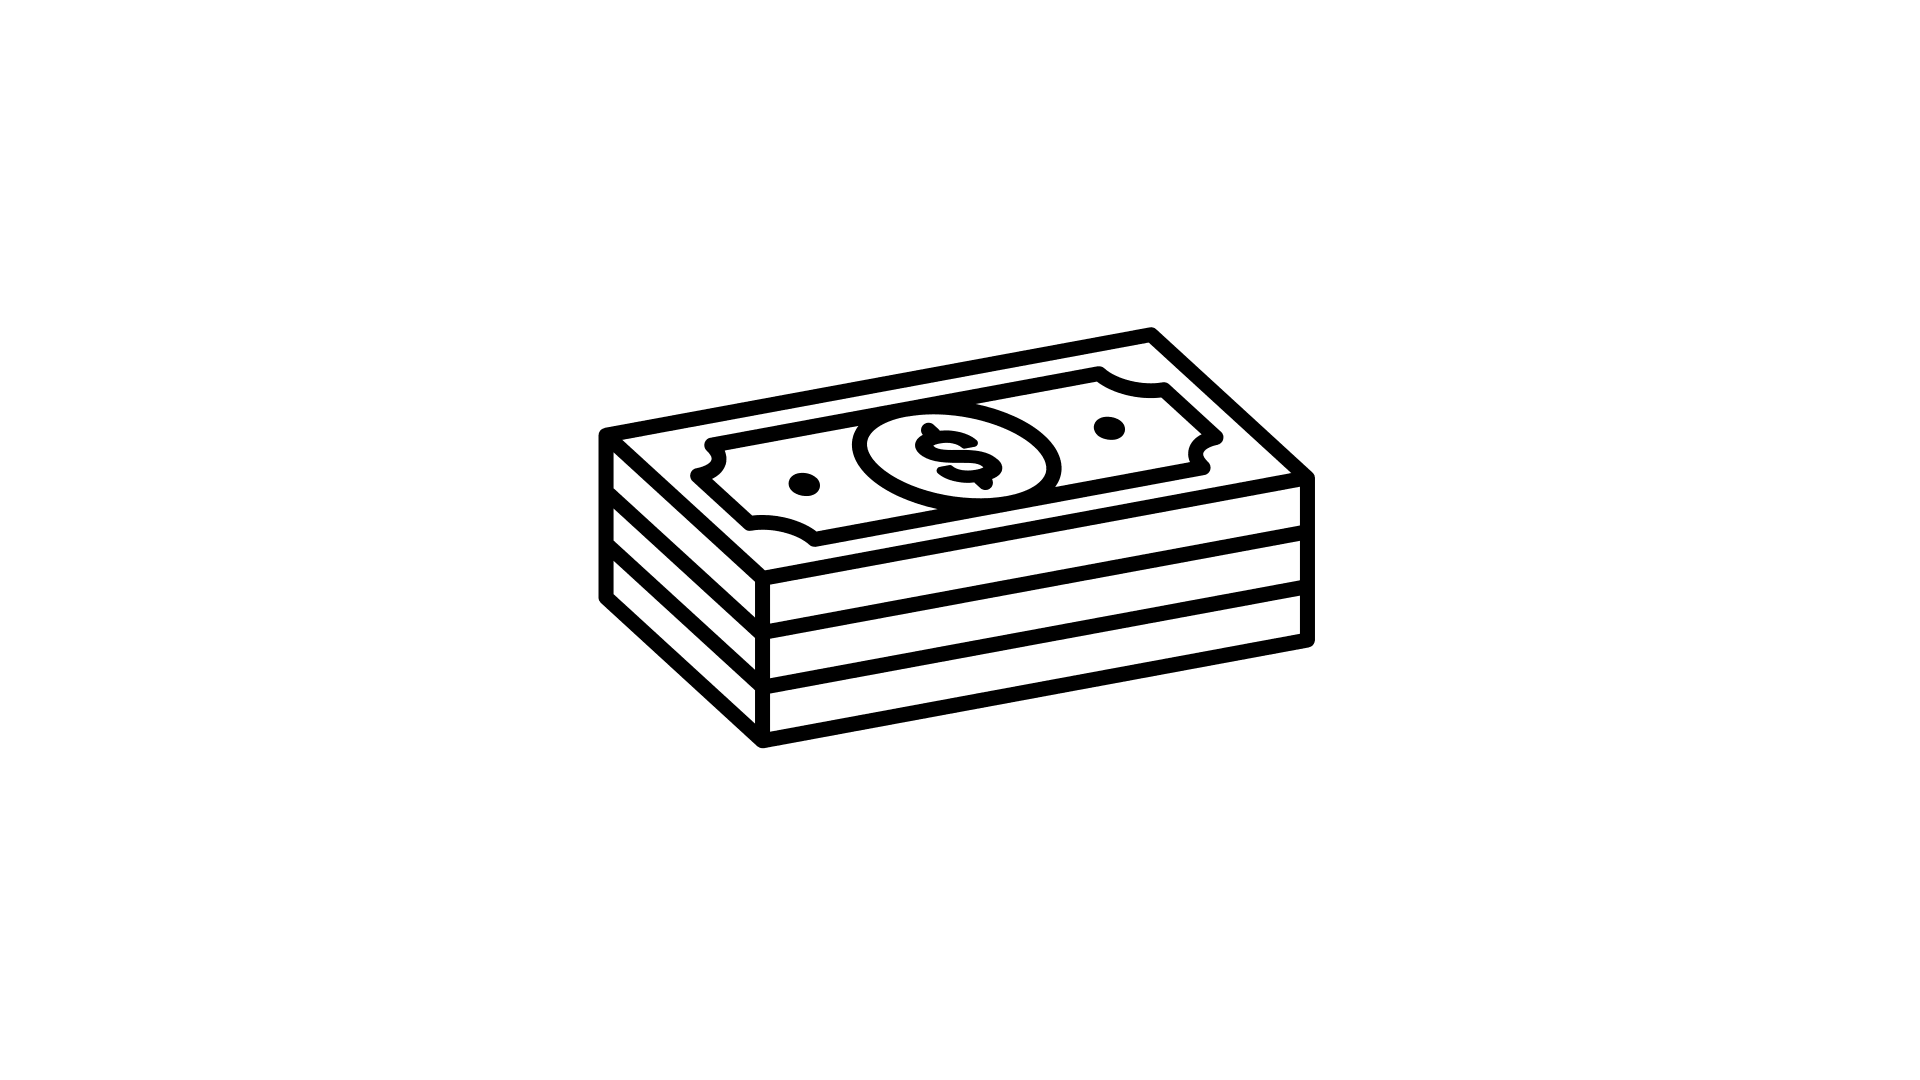 stack of money icon